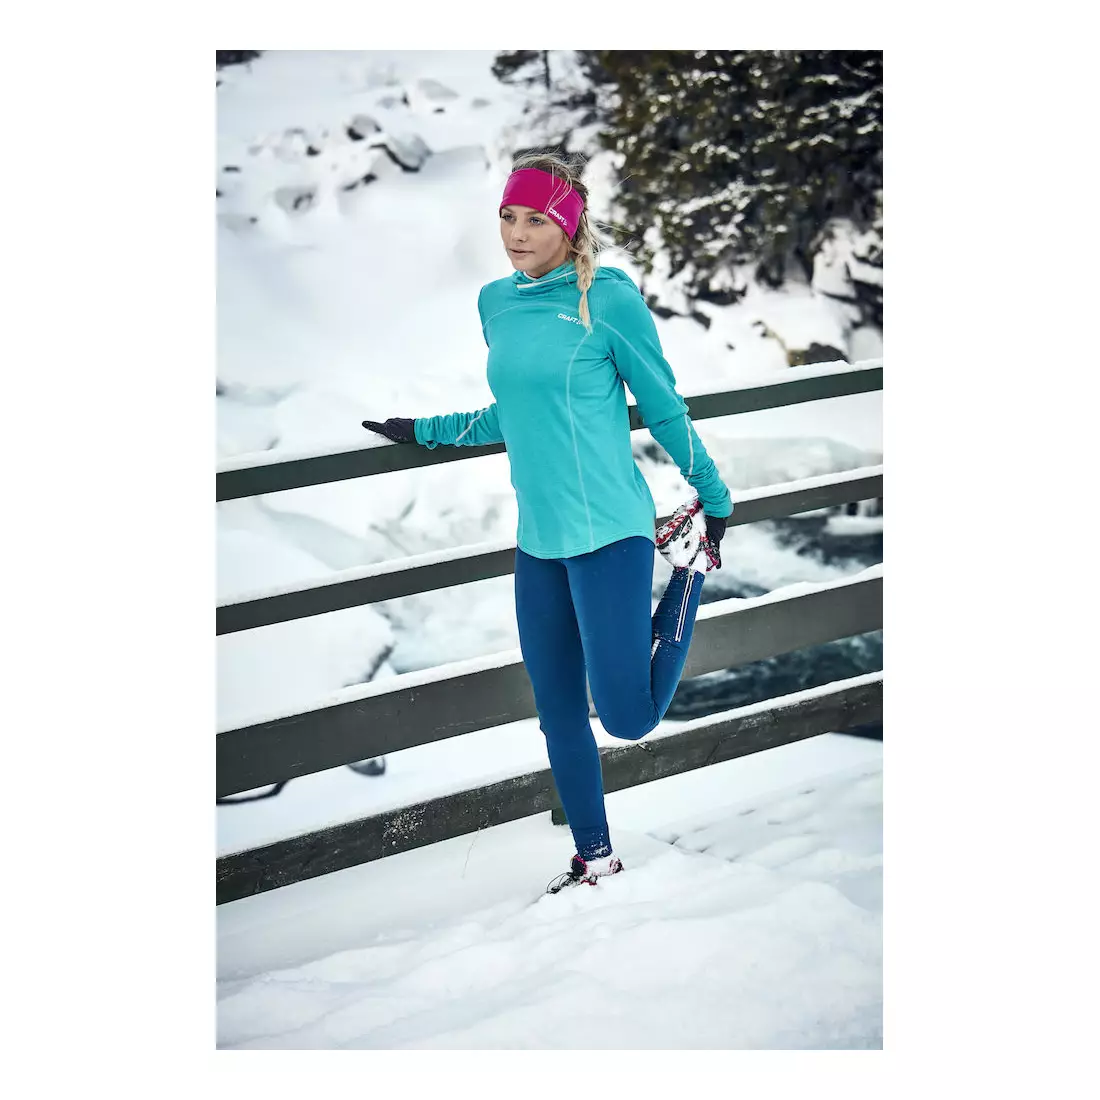 CRAFT DELIGHT women's winter warm running pants 1903612-9999